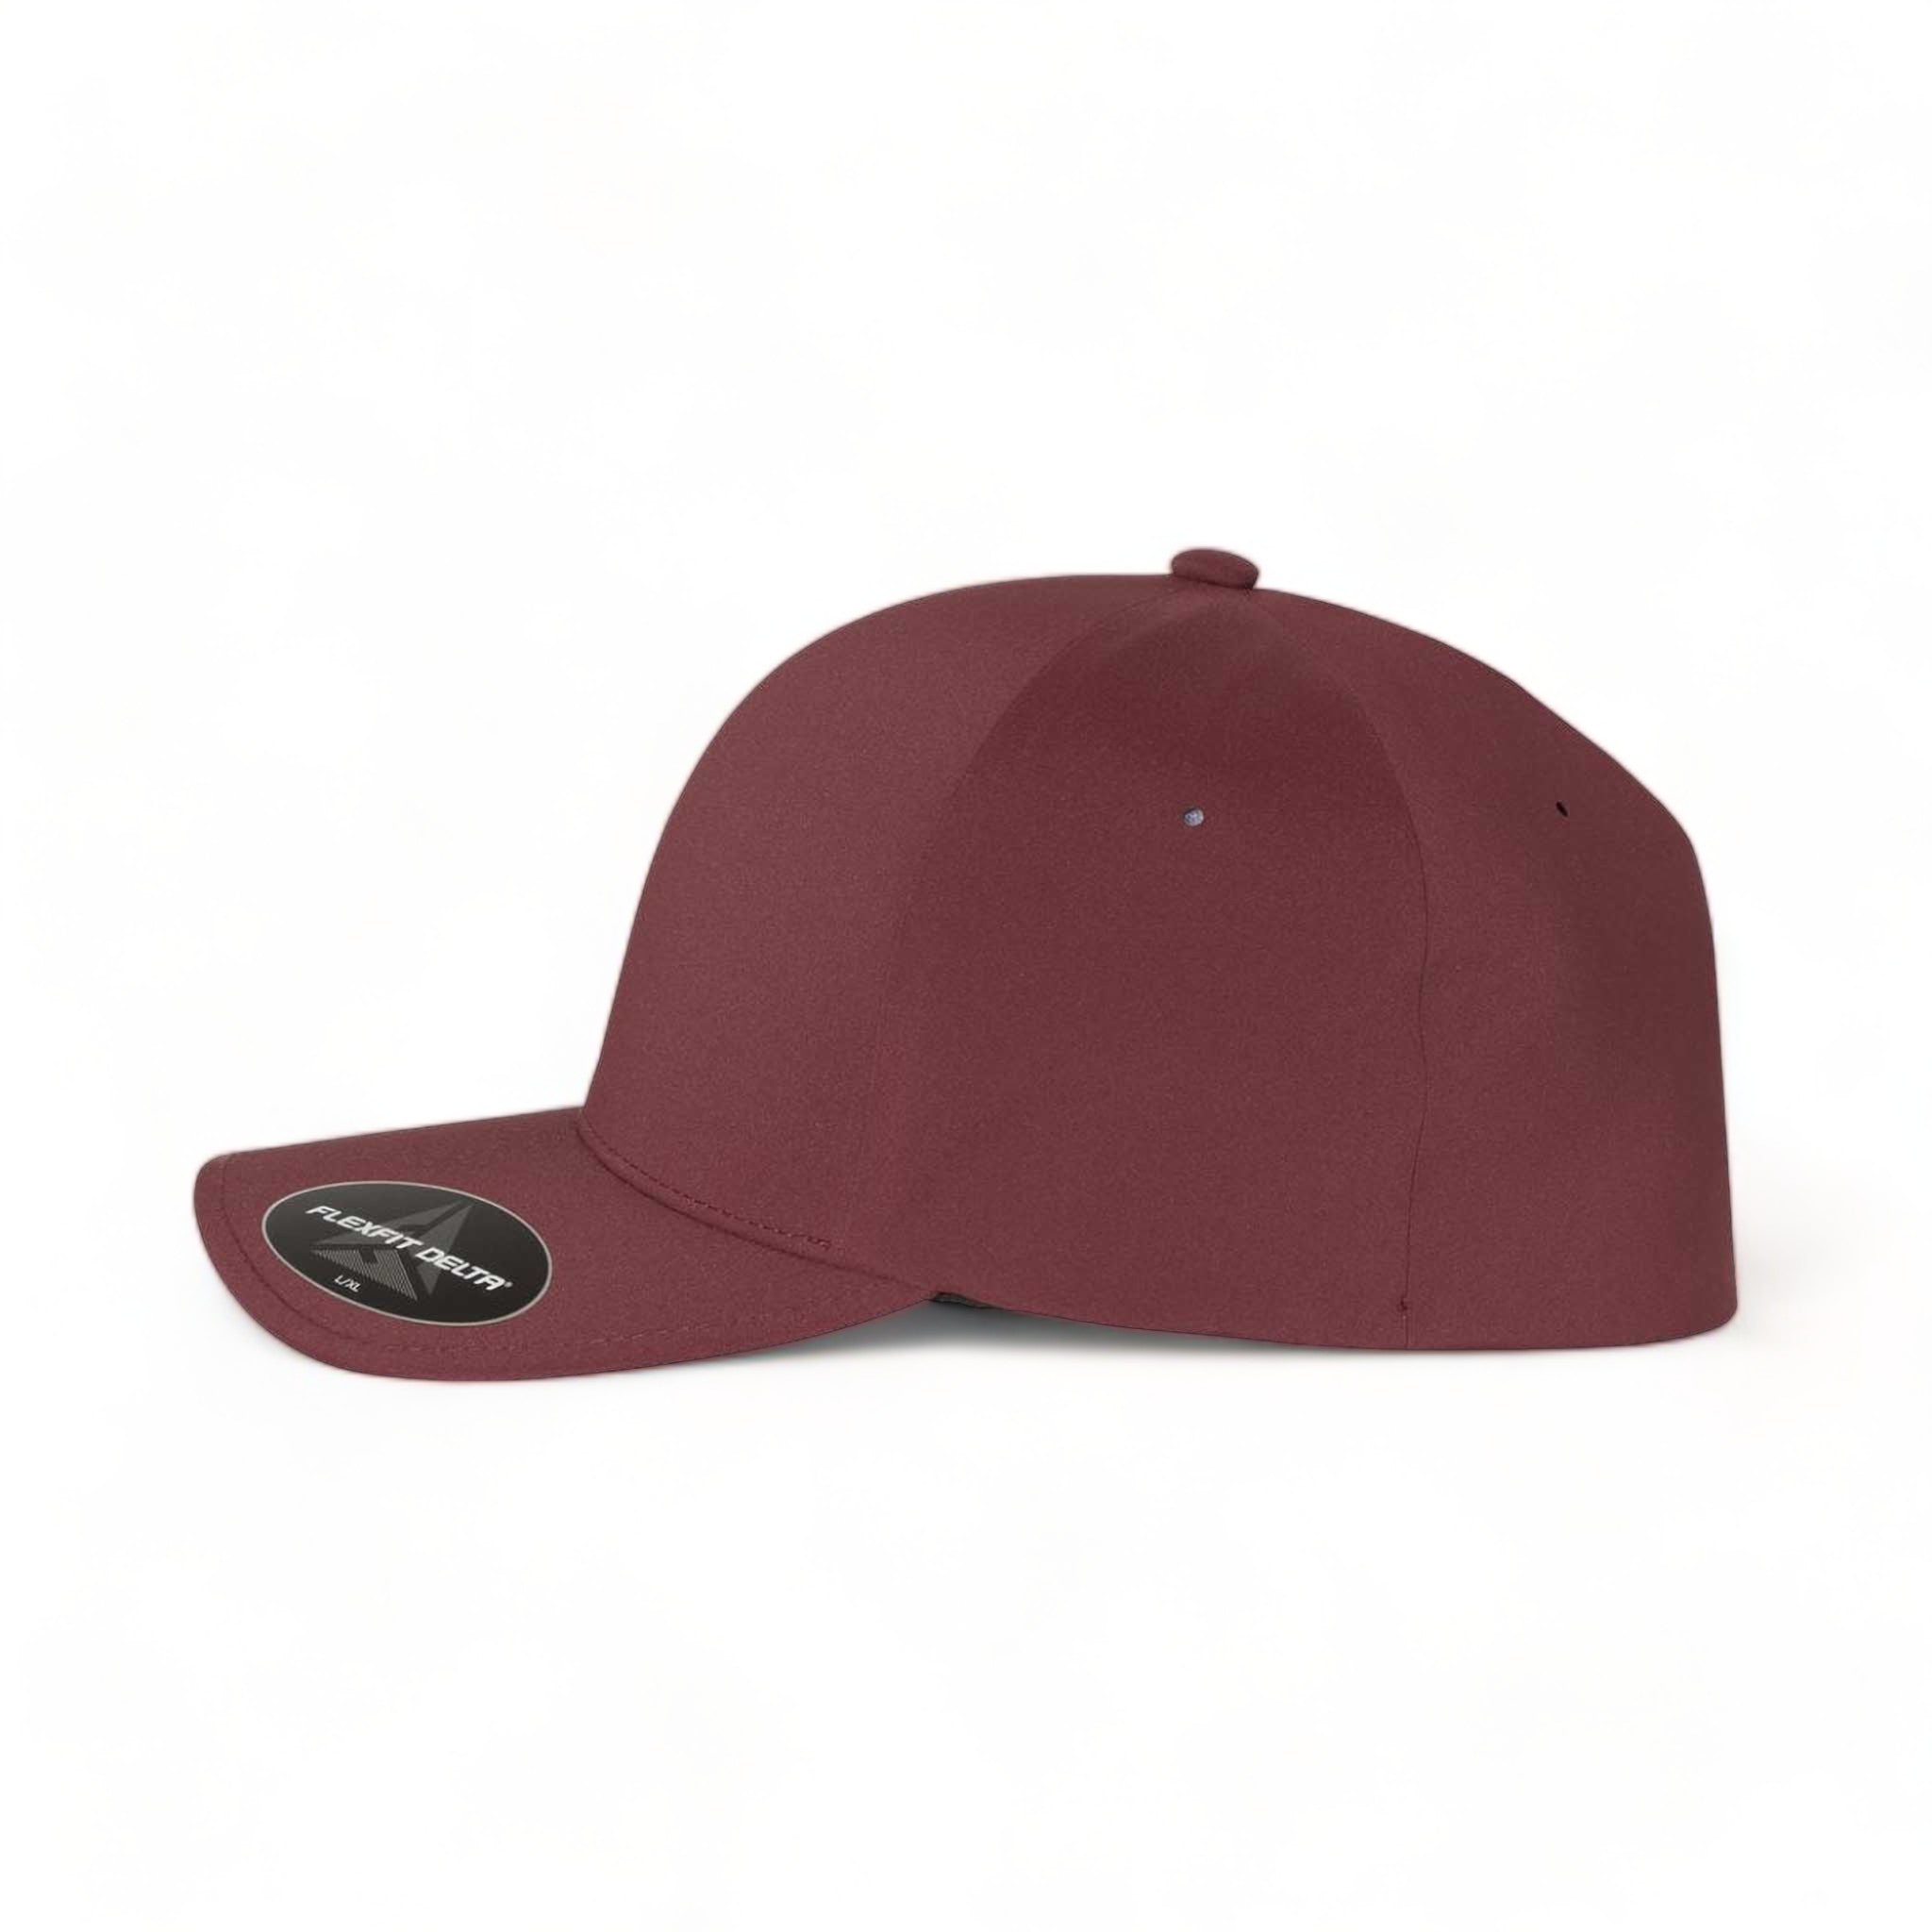 Side view of Flexfit 180 custom hat in maroon